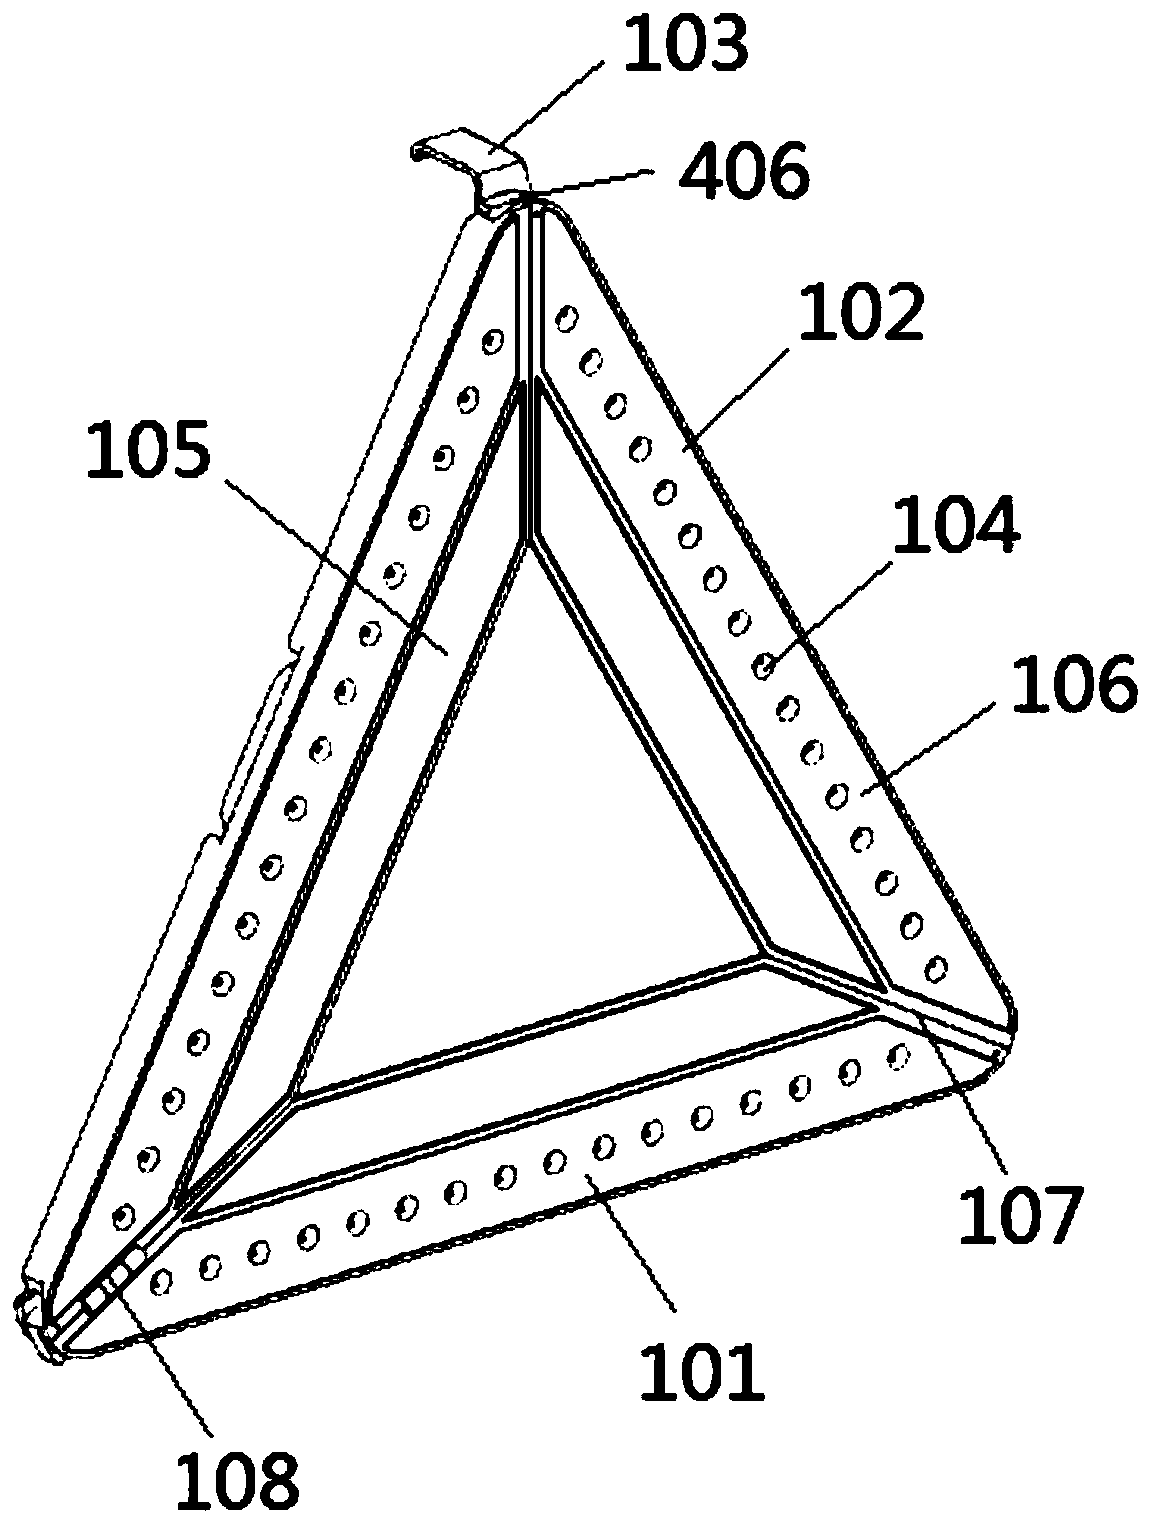 Triangular board convenient to store